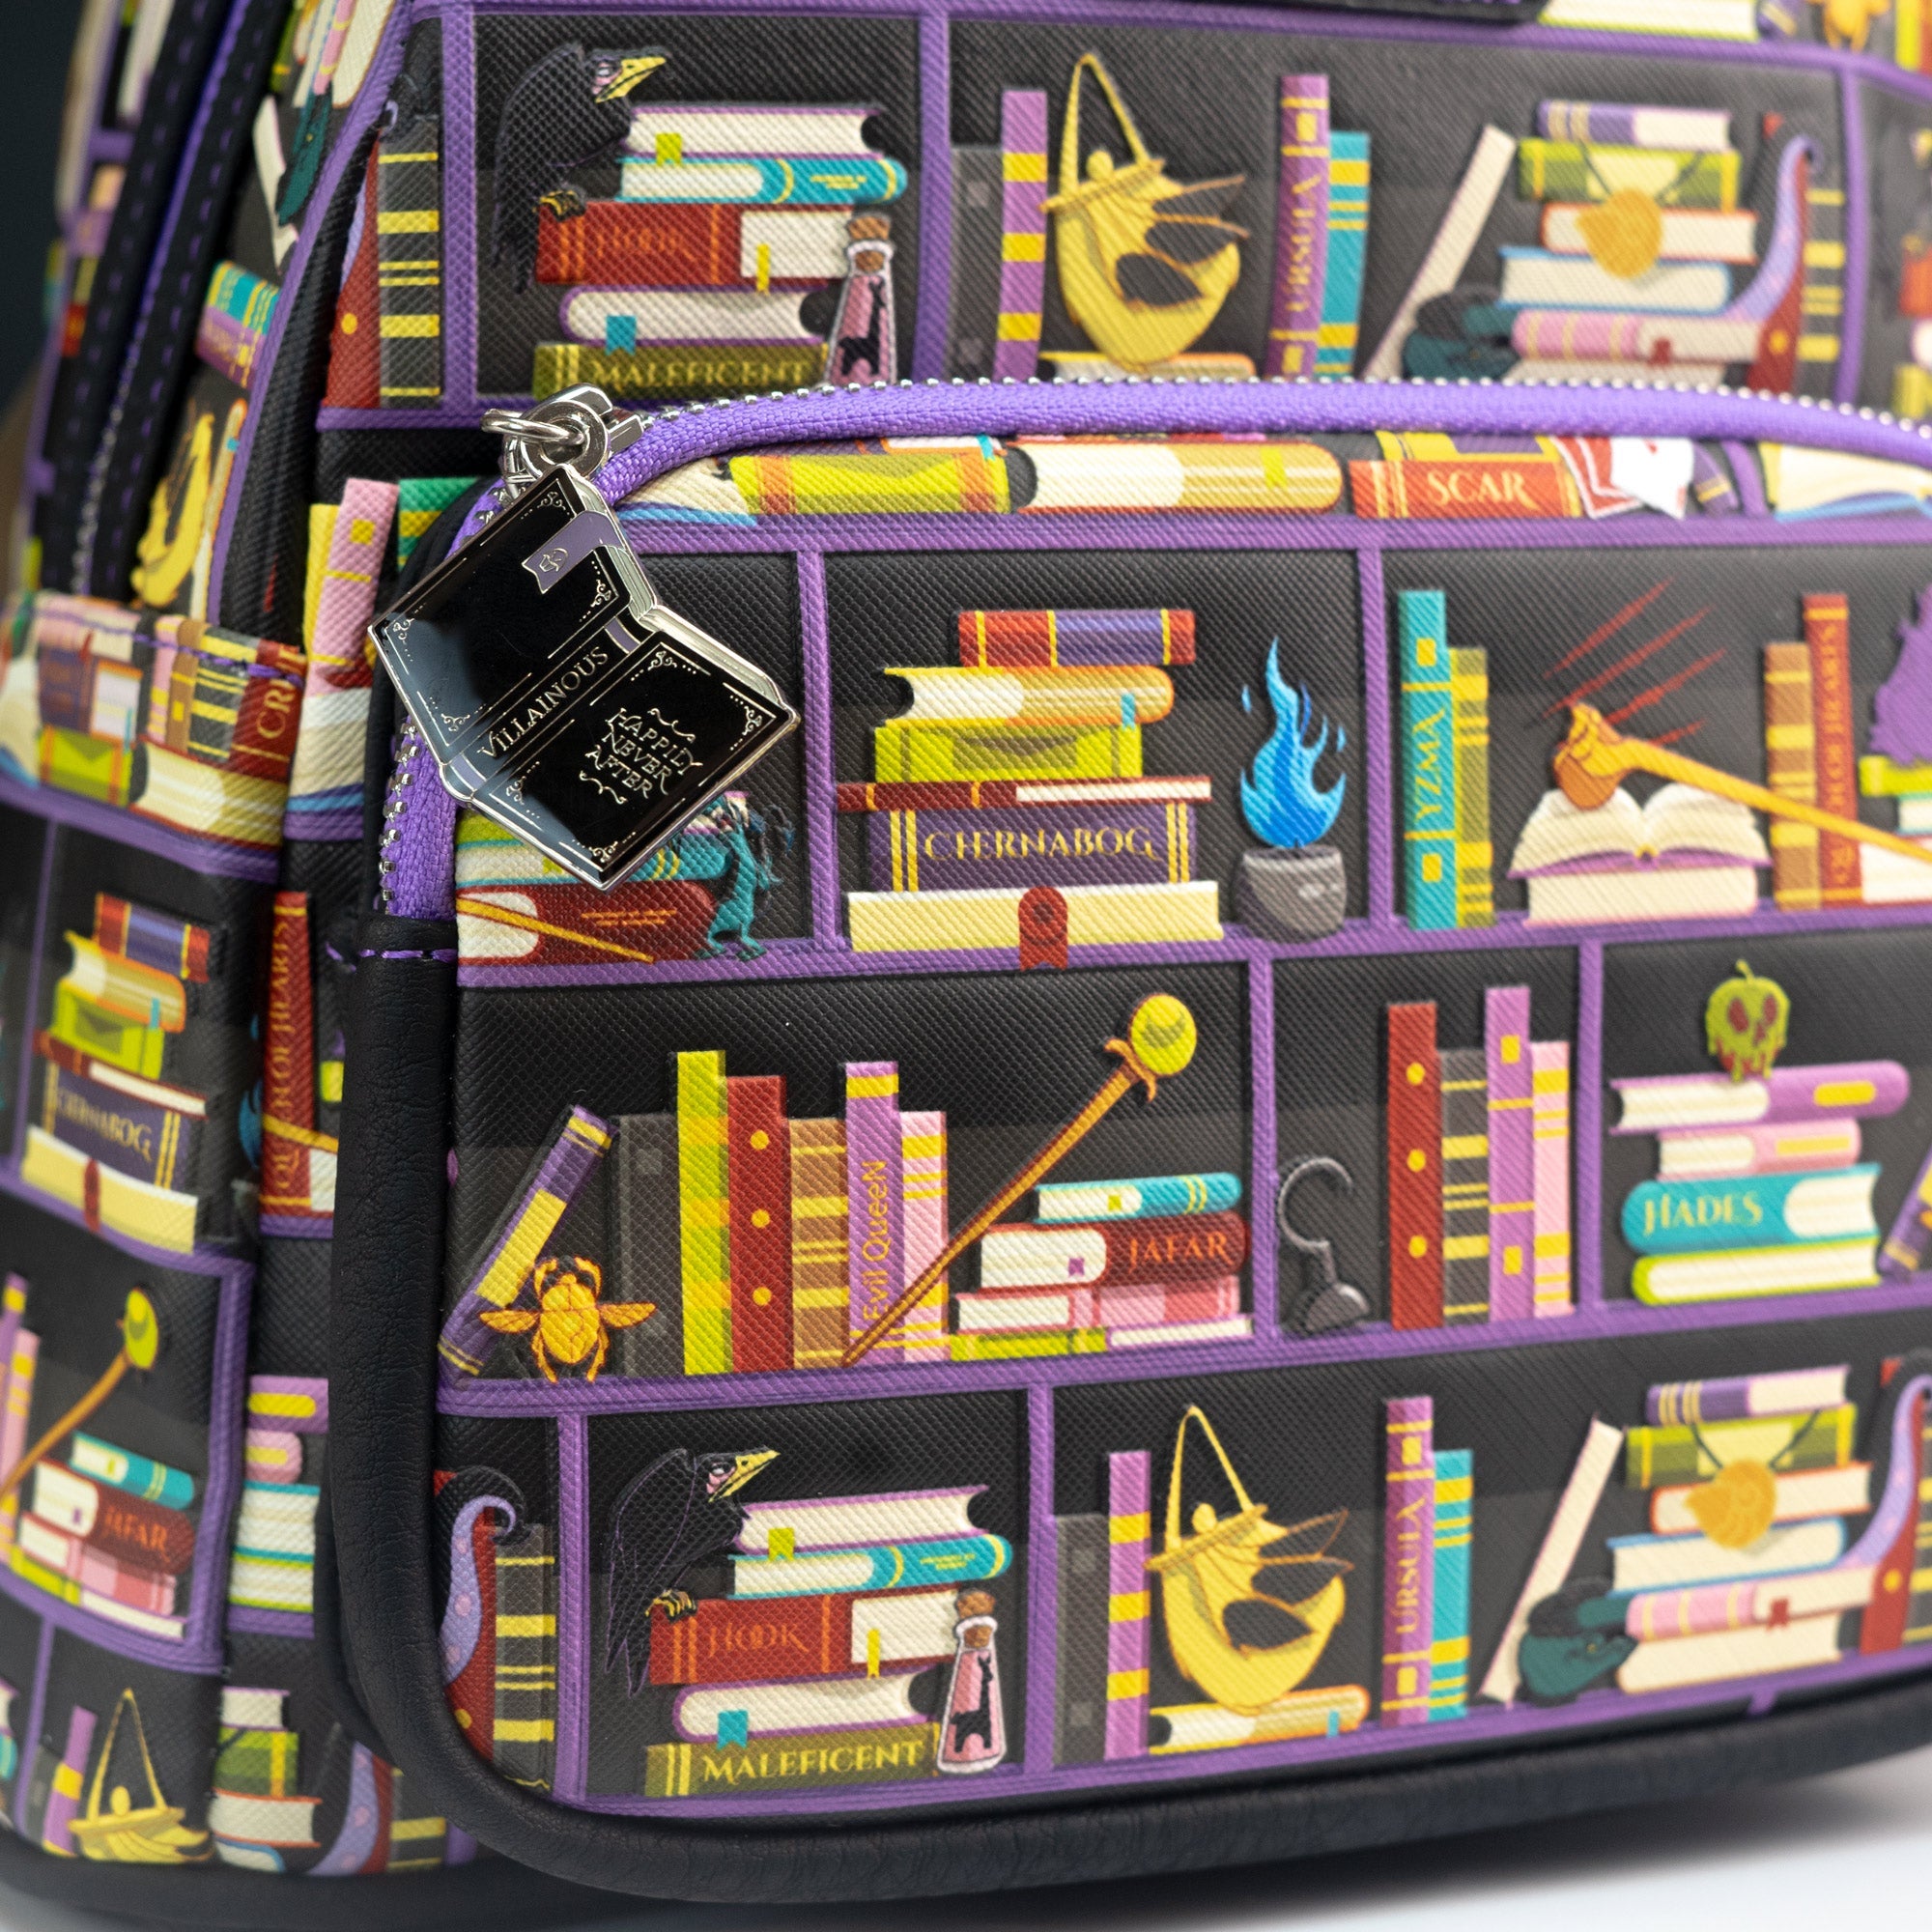 Loungefly x Disney Villains Books Mini Backpack - GeekCore